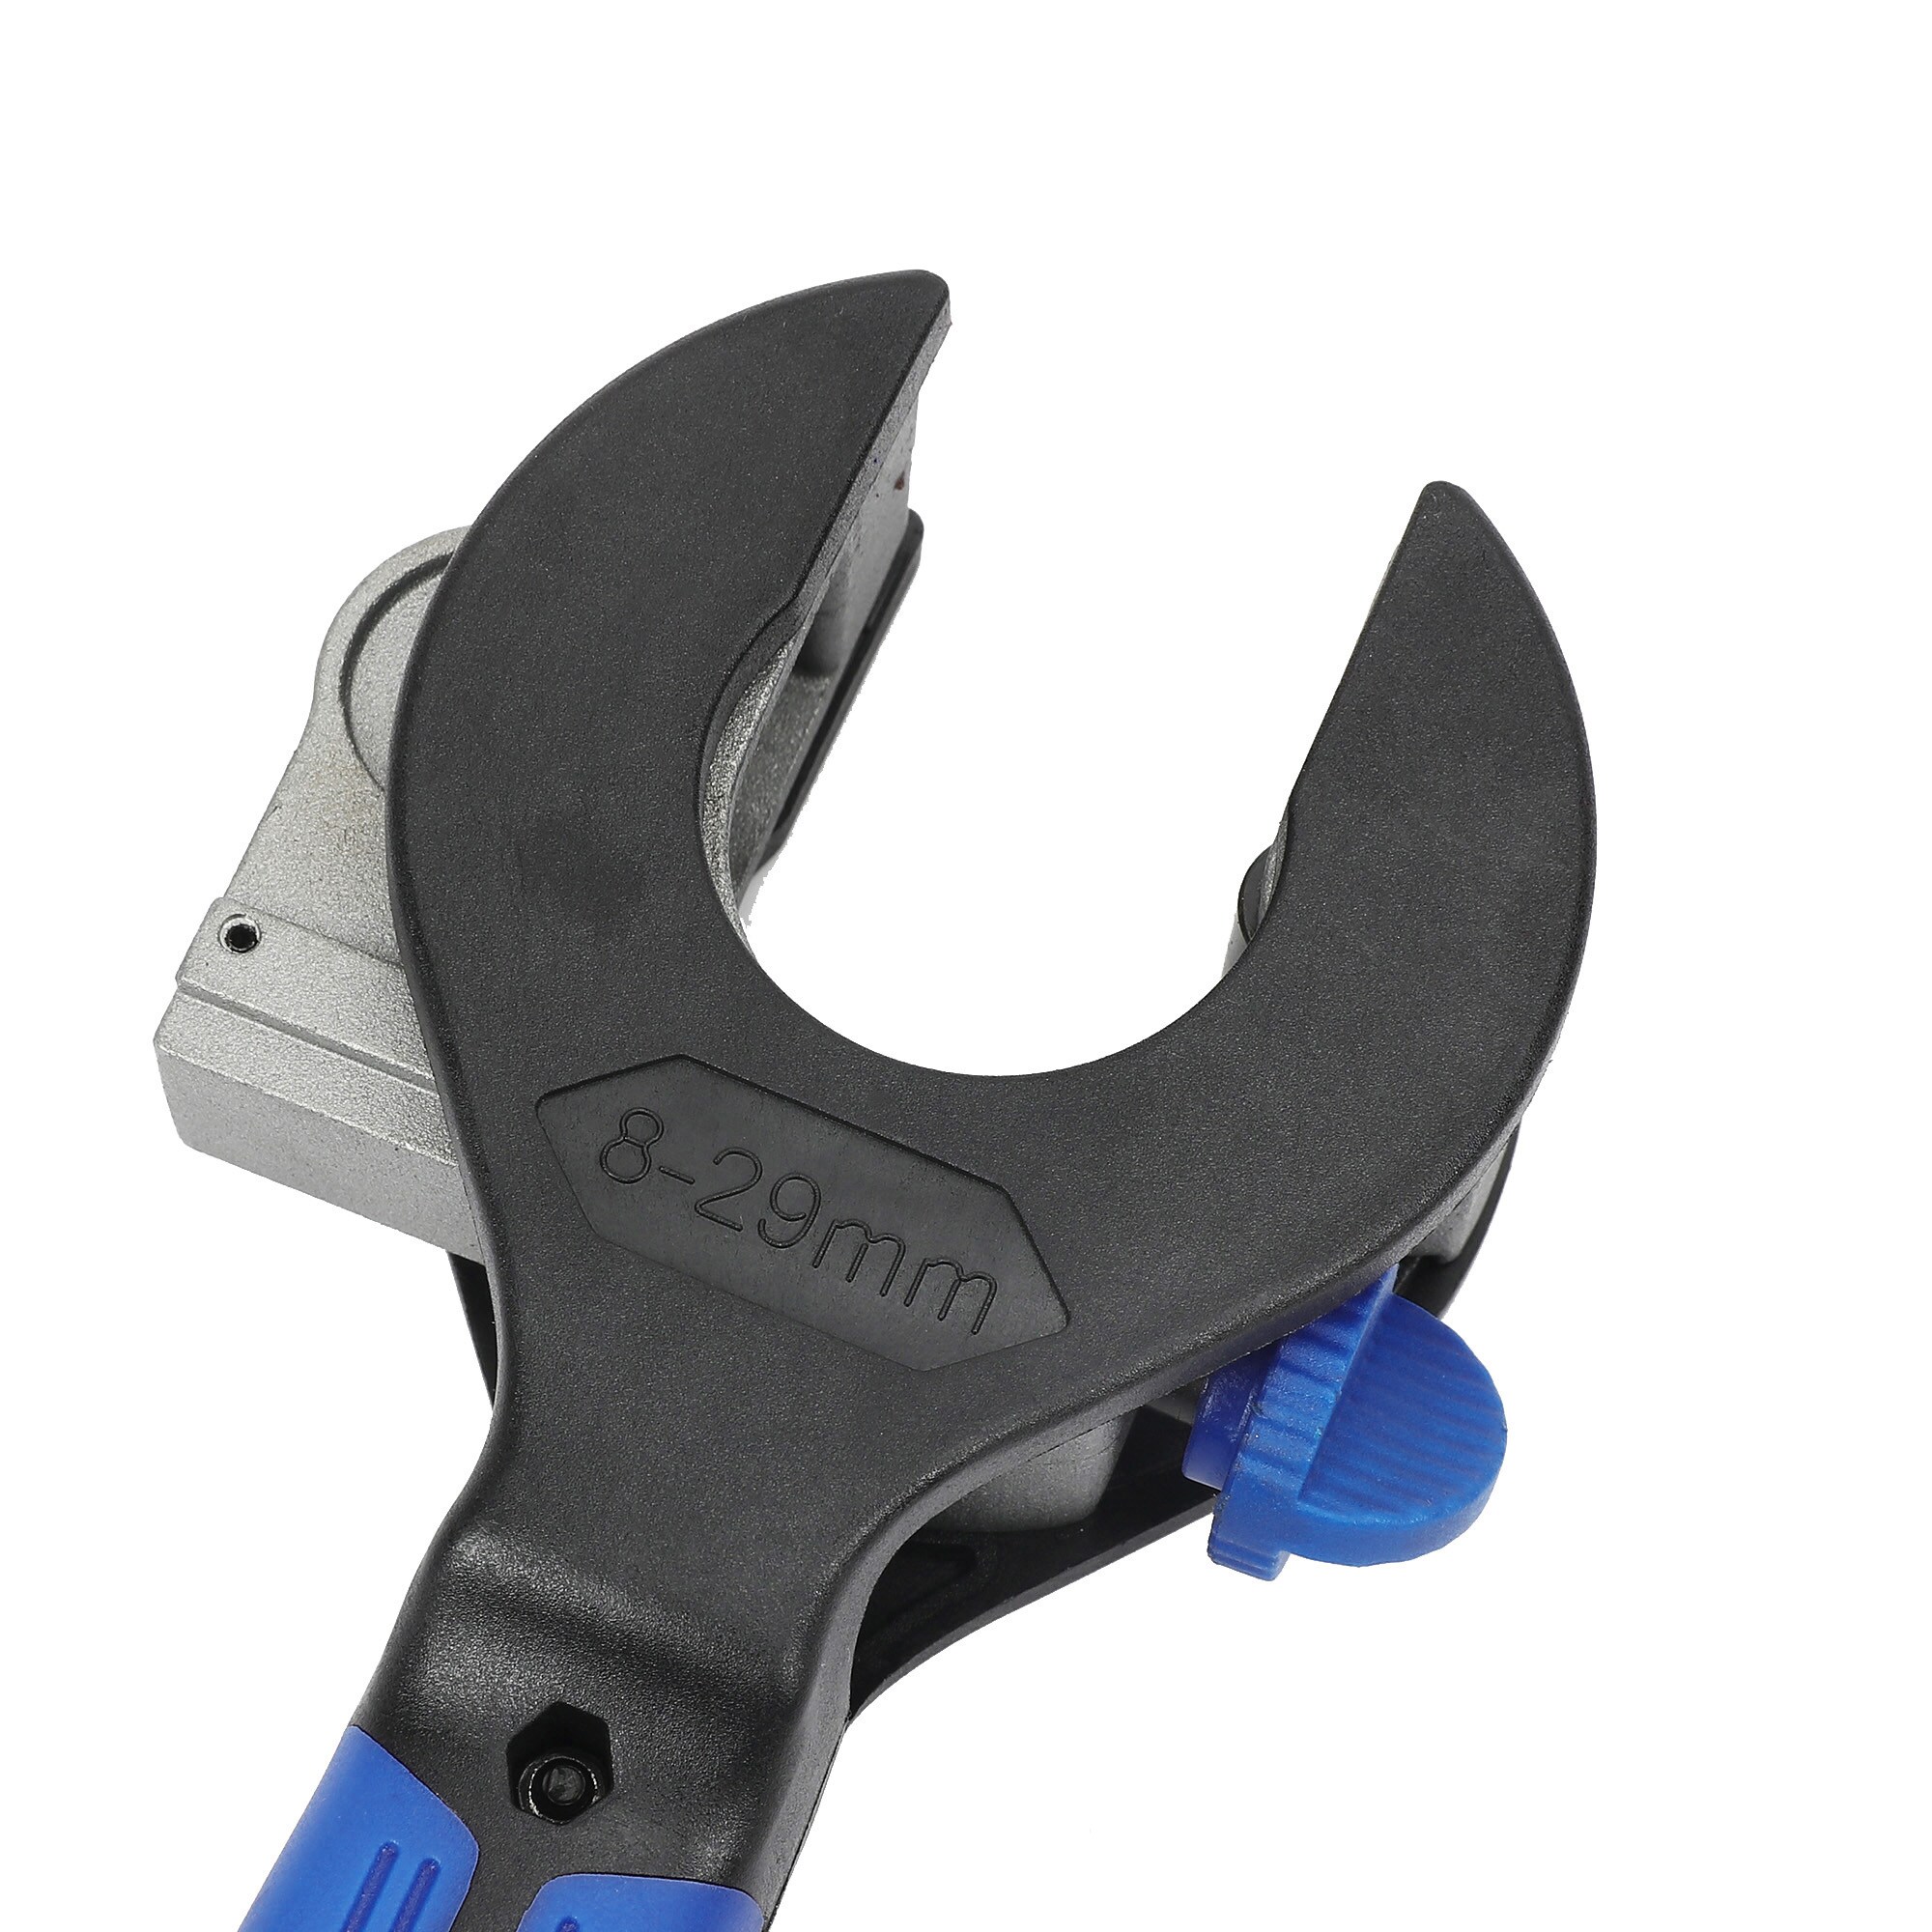 Kobalt 1¼ Ratcheting PVC Plastic Cutter Tool, Used